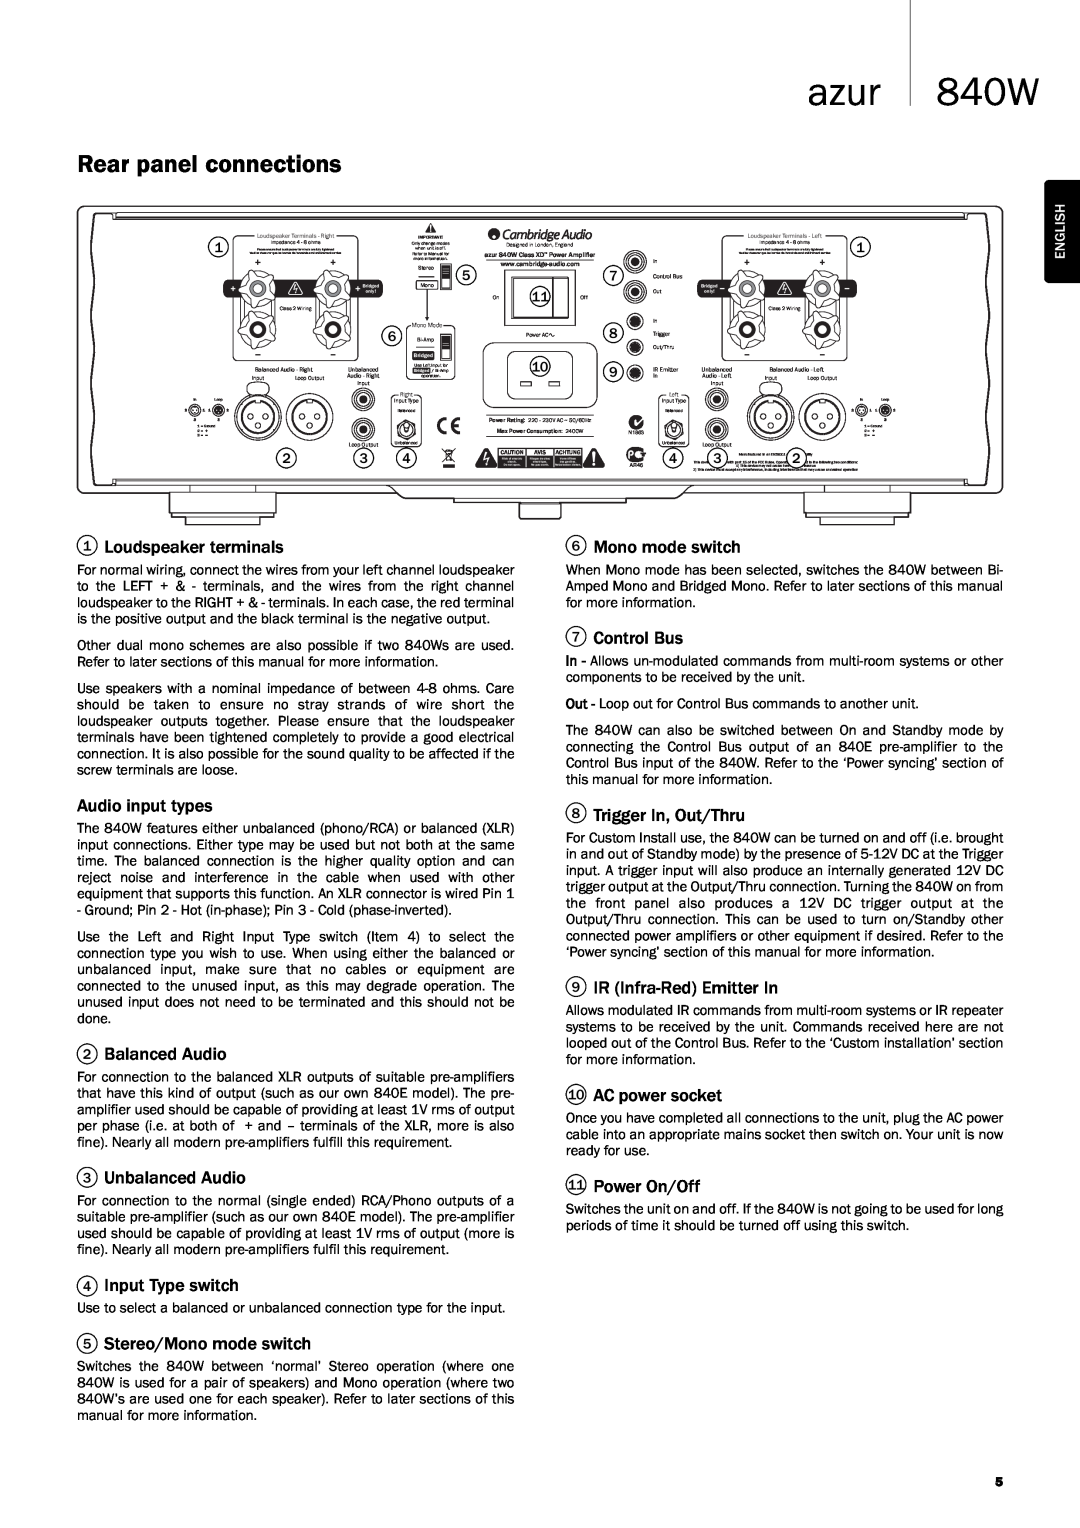 Cambridge Audio Azur 840W user manual Rear panel connections, azur 840W 